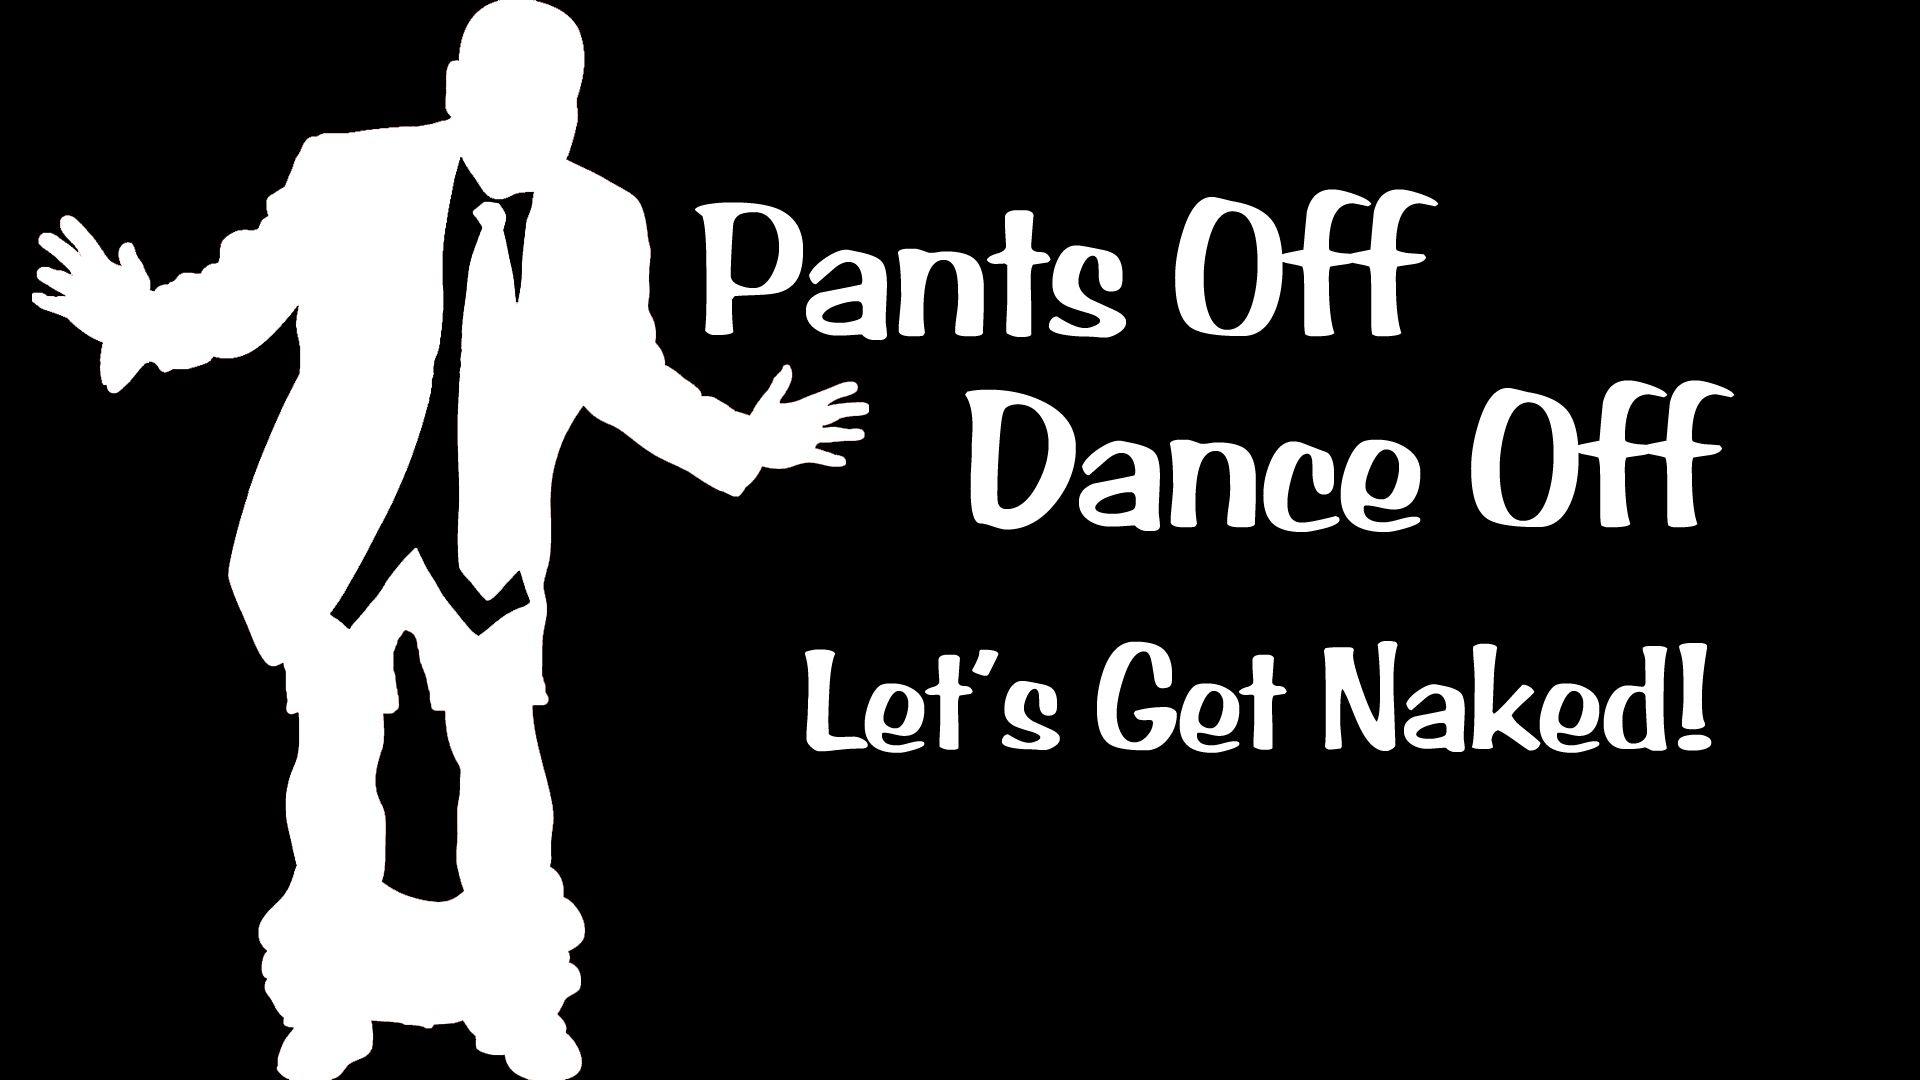 Dance off naked